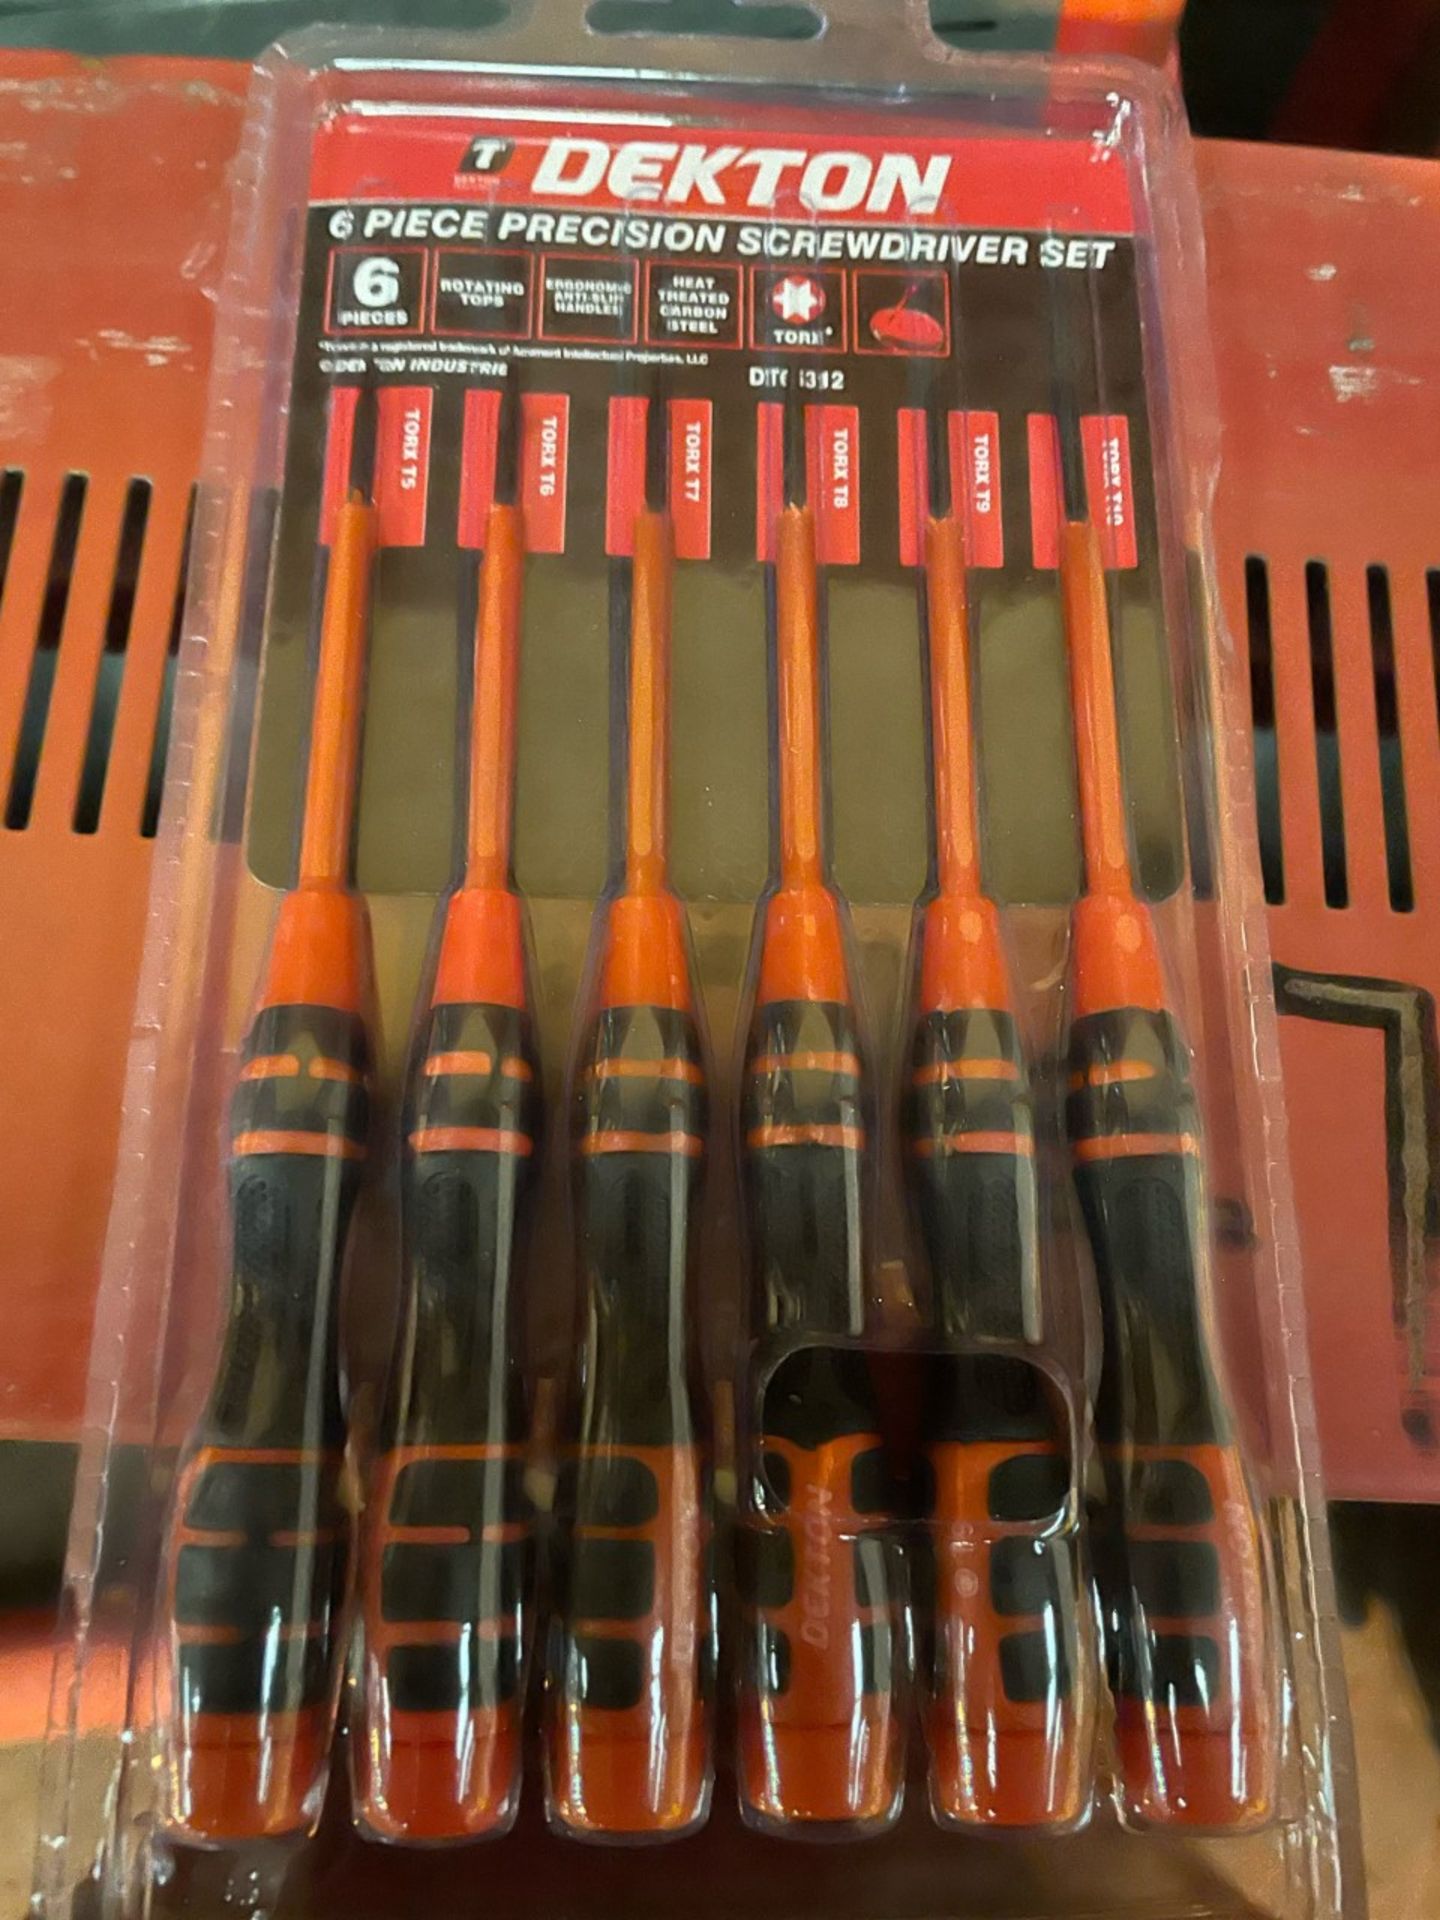 New Dekton 6 piece precision screwdriver set